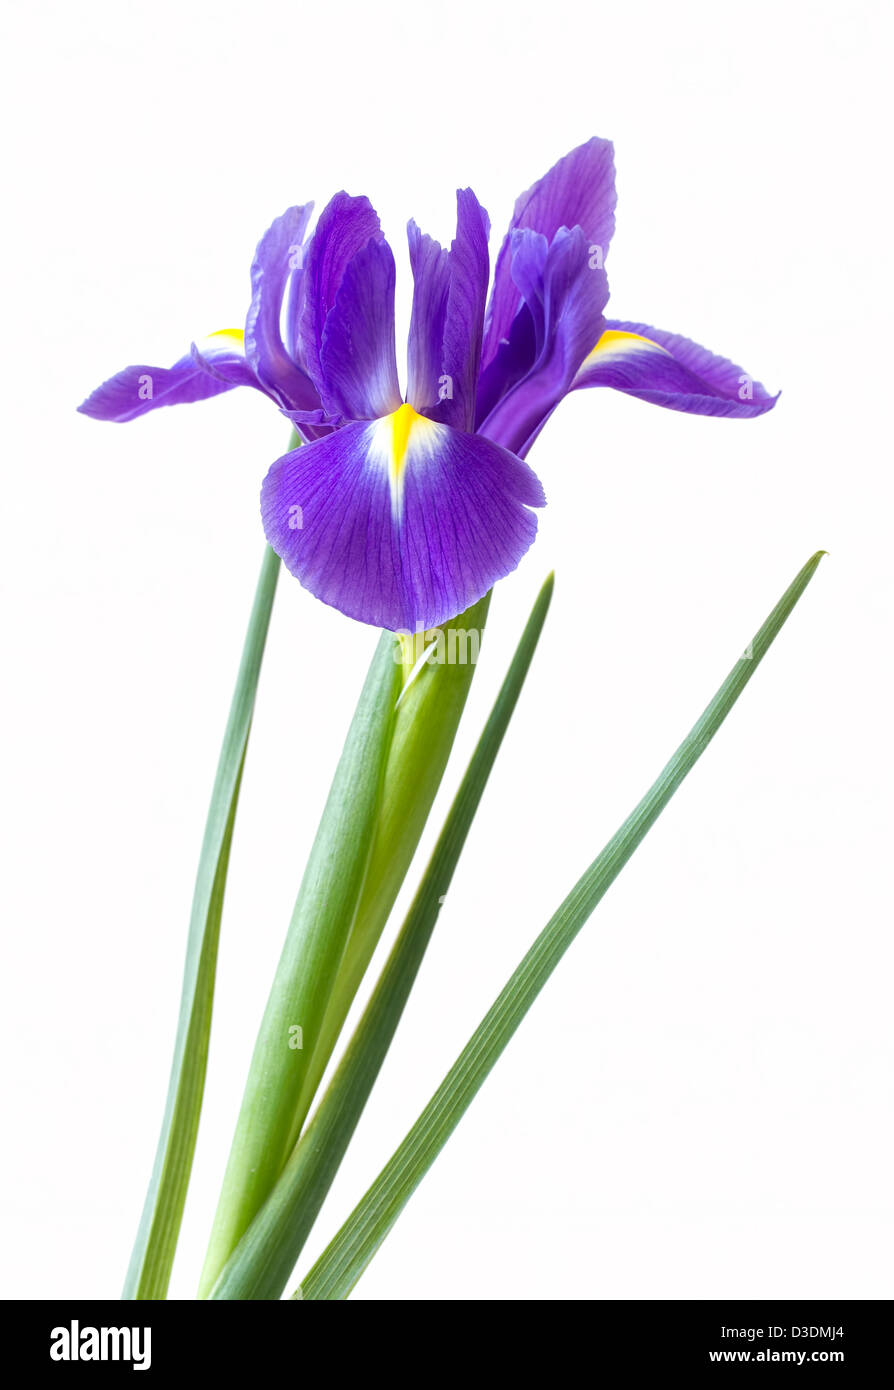 Single purple iris flower on white background Stock Photo